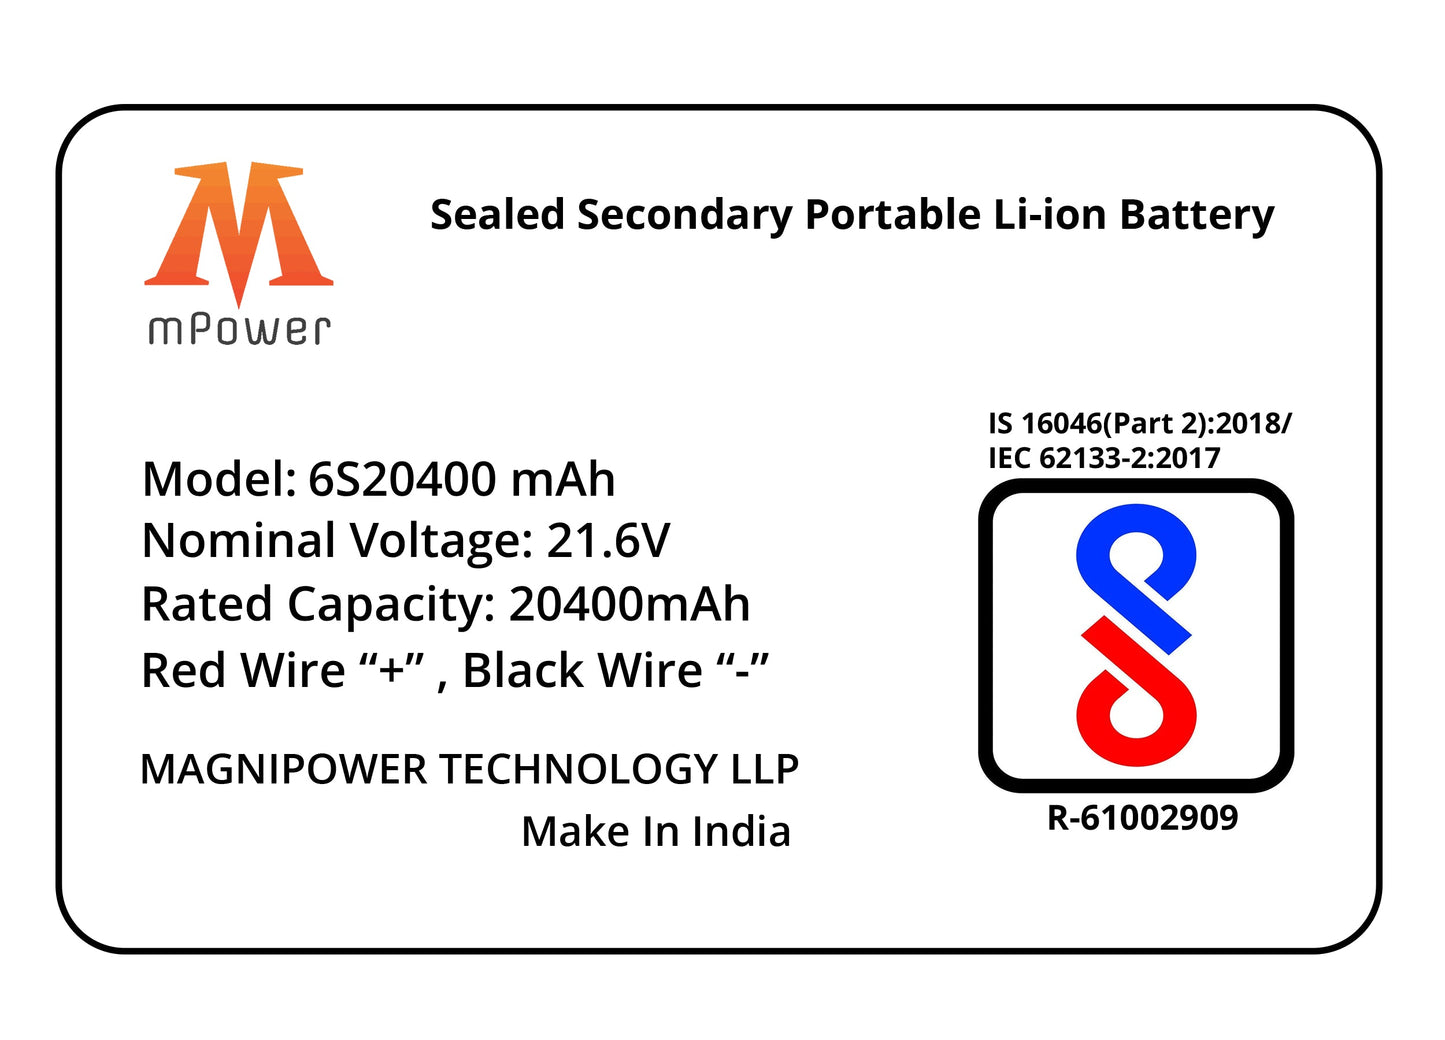 mPower 6S 20400mAh Lithium-Ion Battery for Surveillance Drones-mpowerlithium